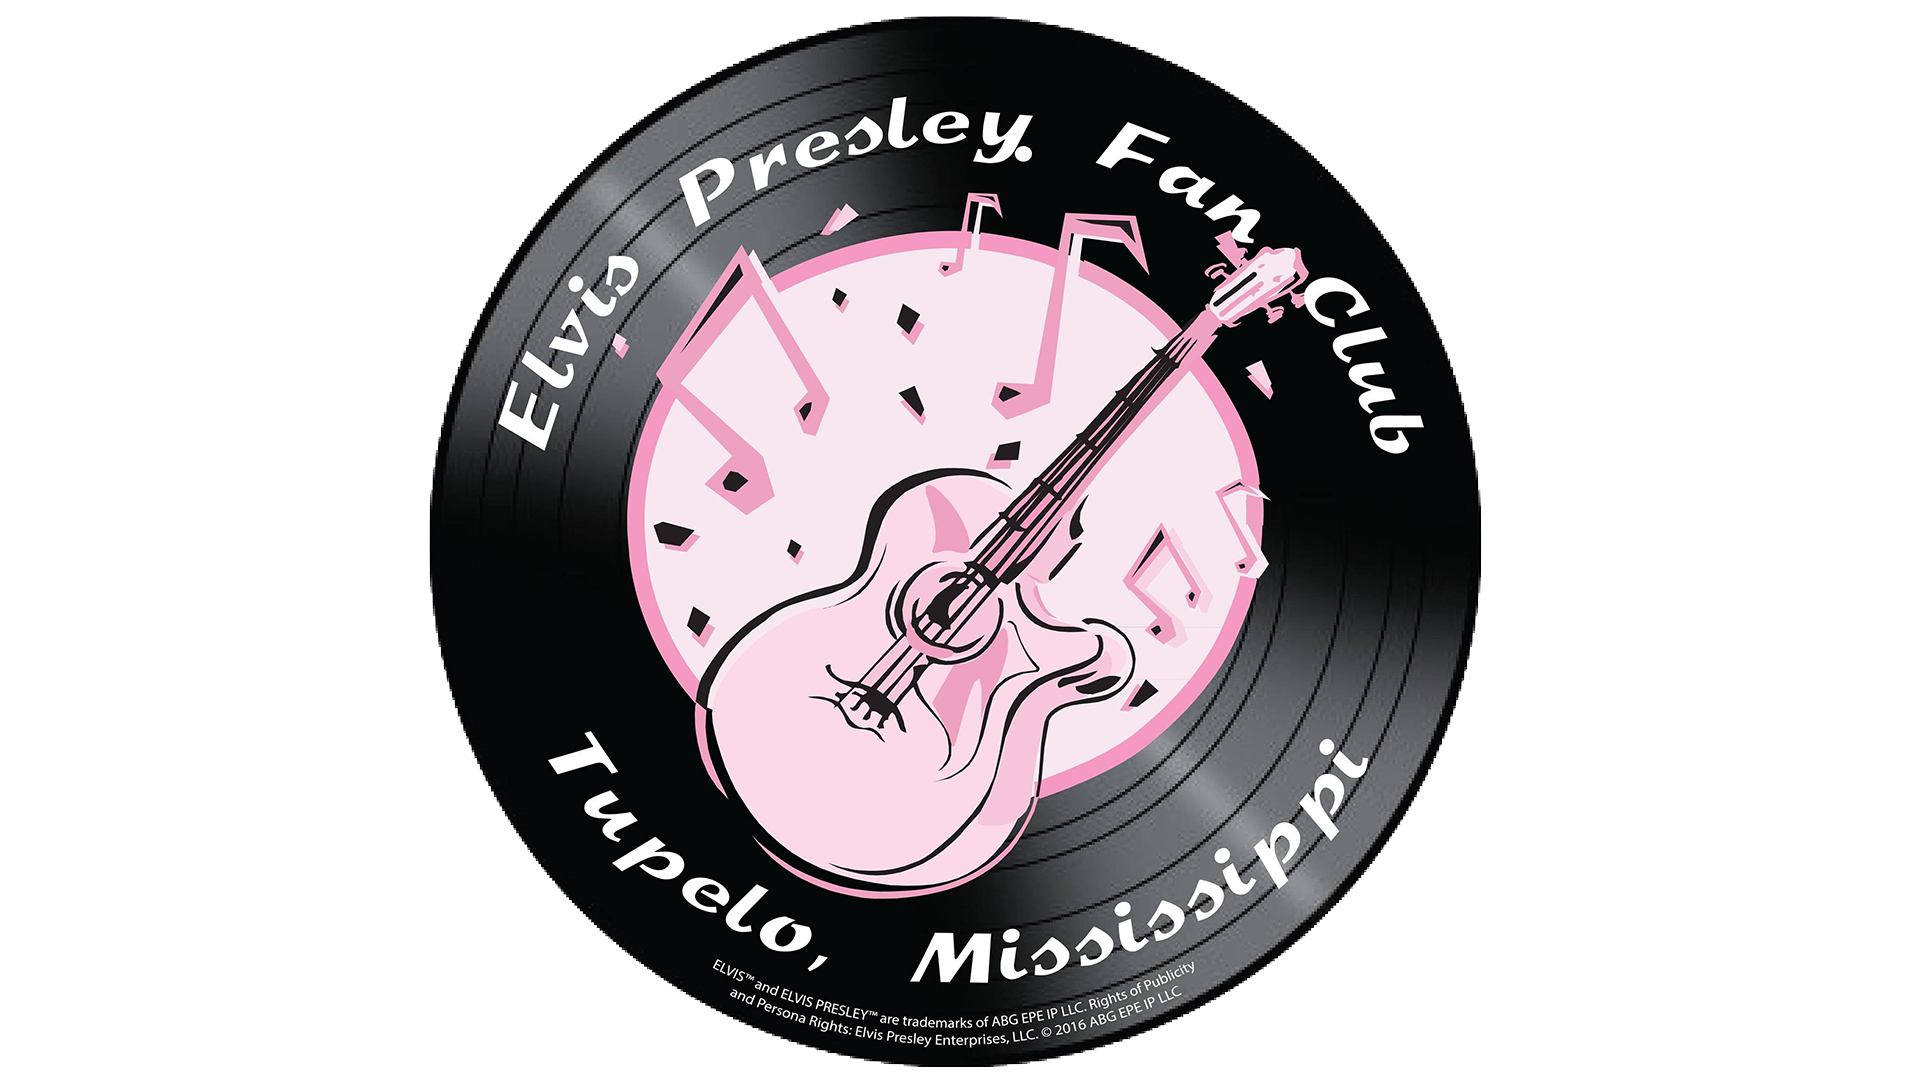 Tupelo Elvis Presley Fan Club logo copy.png